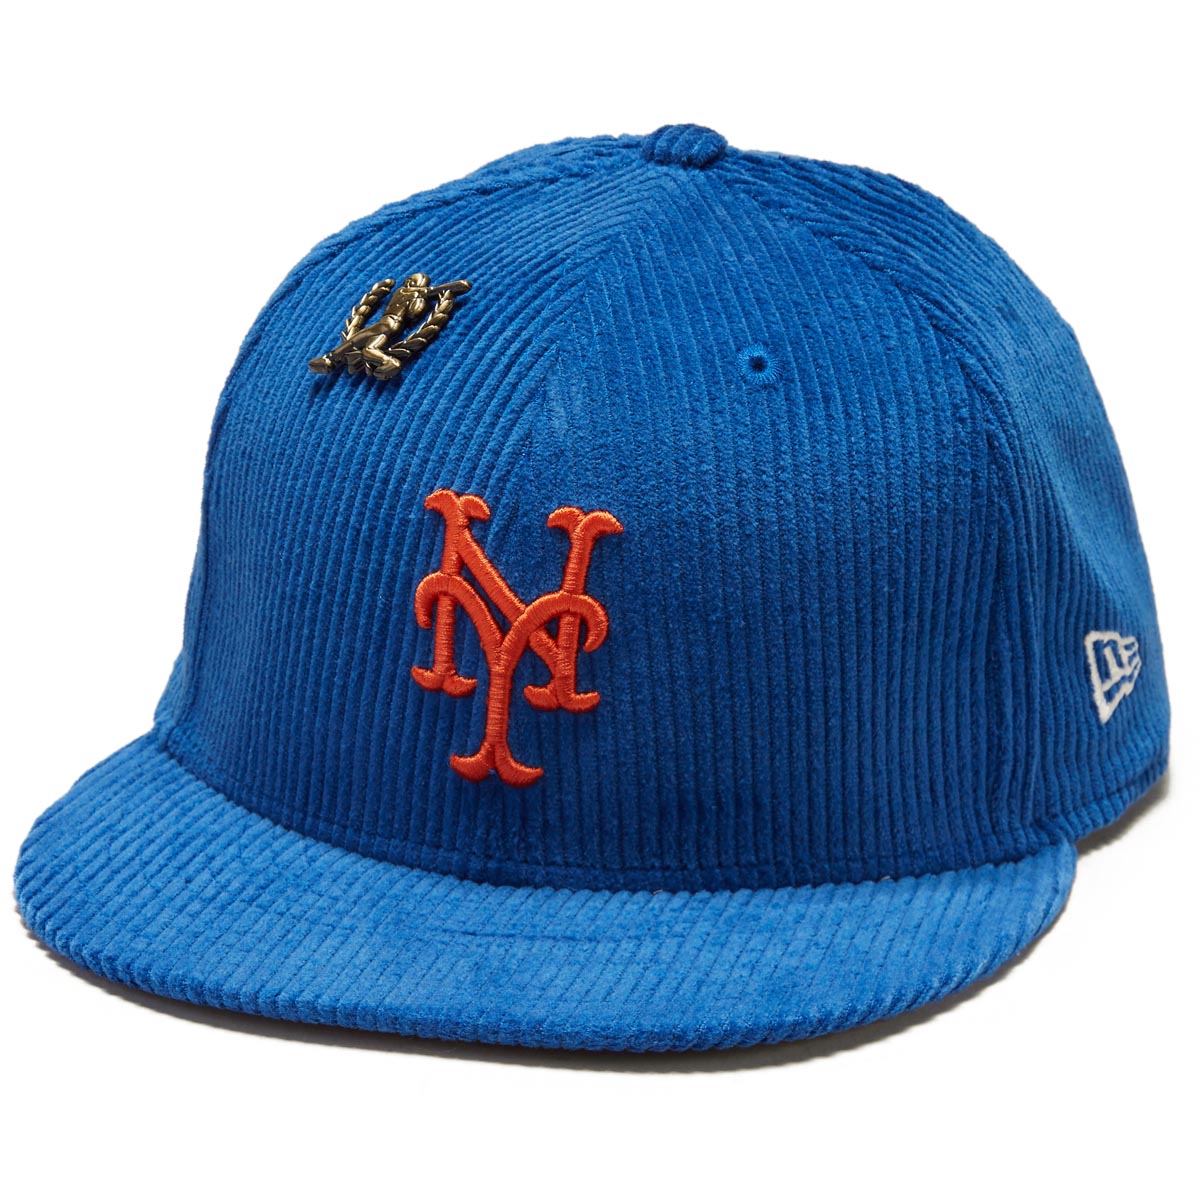 New Era 5950 Letterman Pin Hat - New York Mets image 1